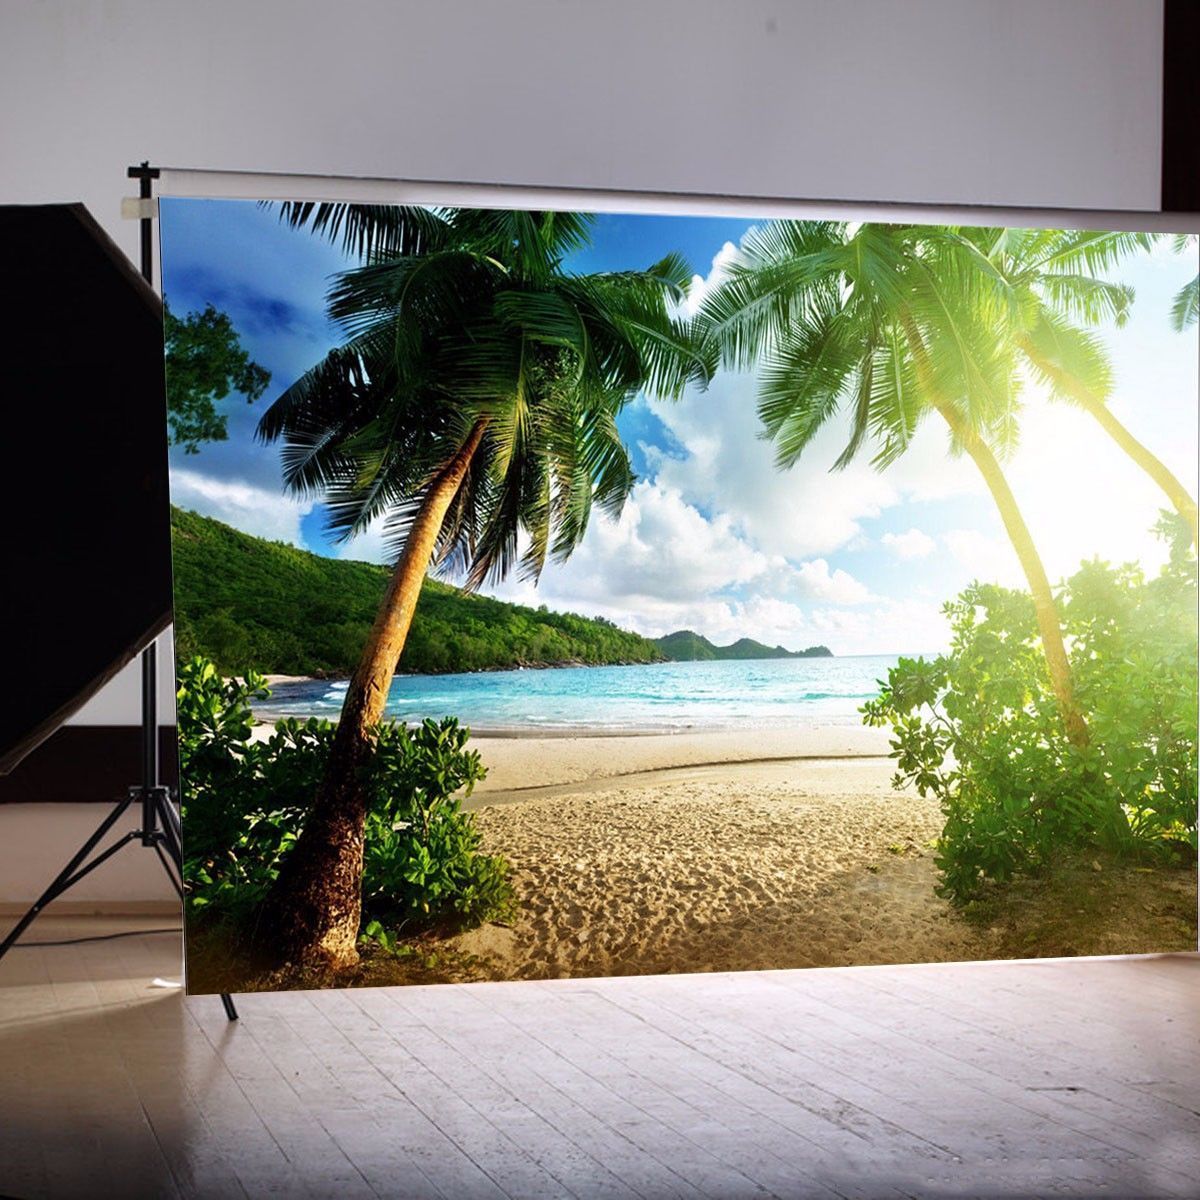 7x5ft-Seaside-Beach-Summer-Theme-Photography-Vinyl-Backdrop-Studio-Background-21m-x-15m-1169327